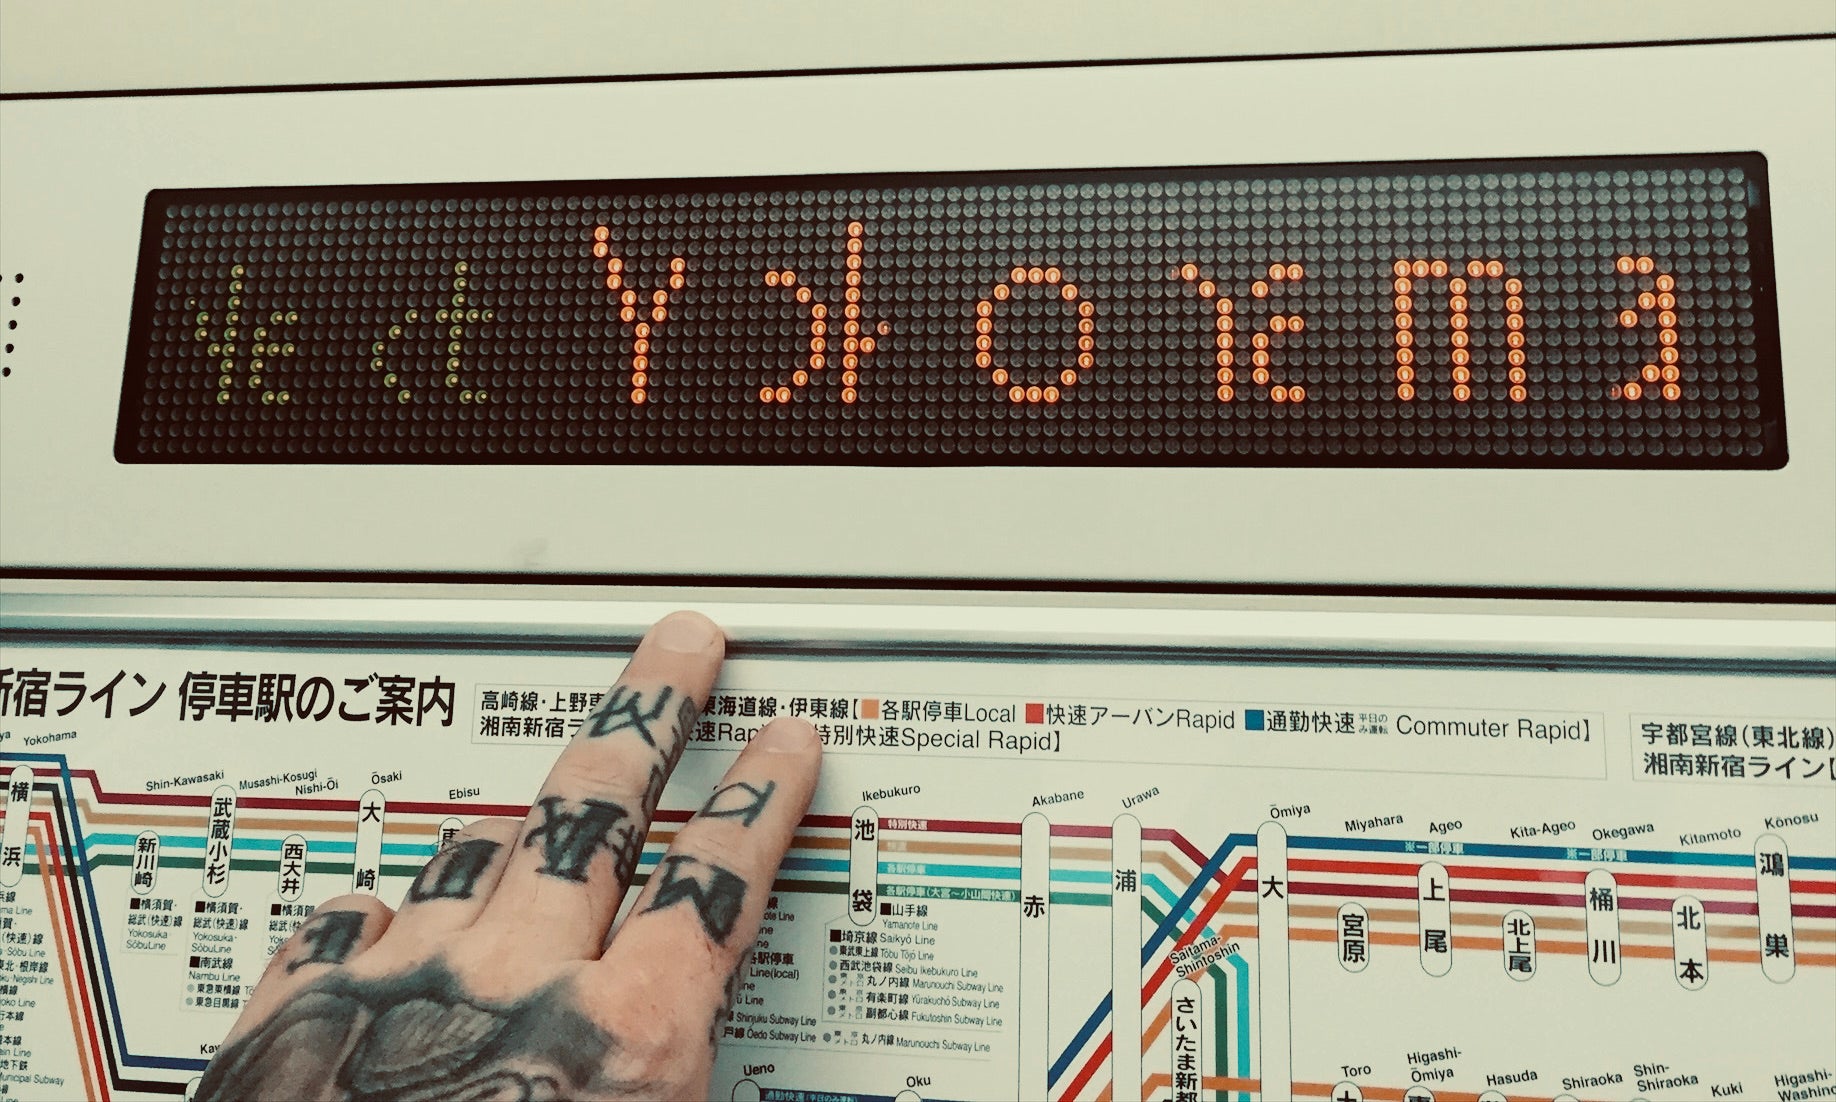 pointing to the Yokohama train station in Japan